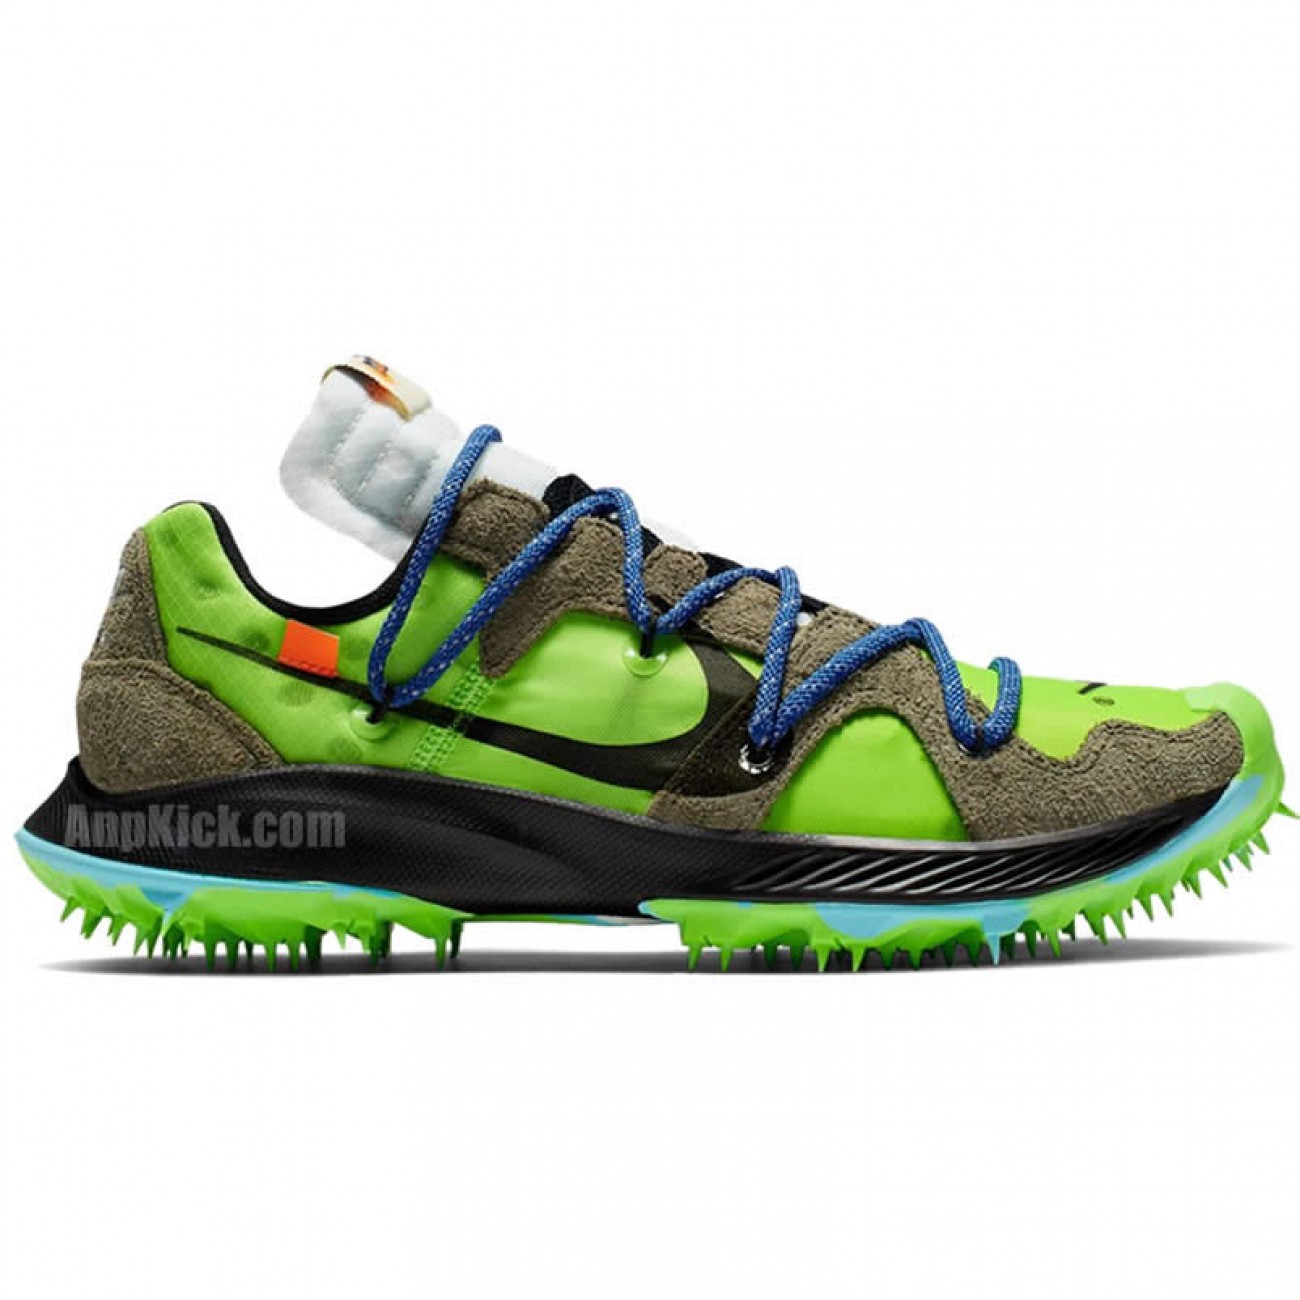 Off-White x Nike Zoom Terra Kiger 5 Green "Athlete In Progress" CD8179-300